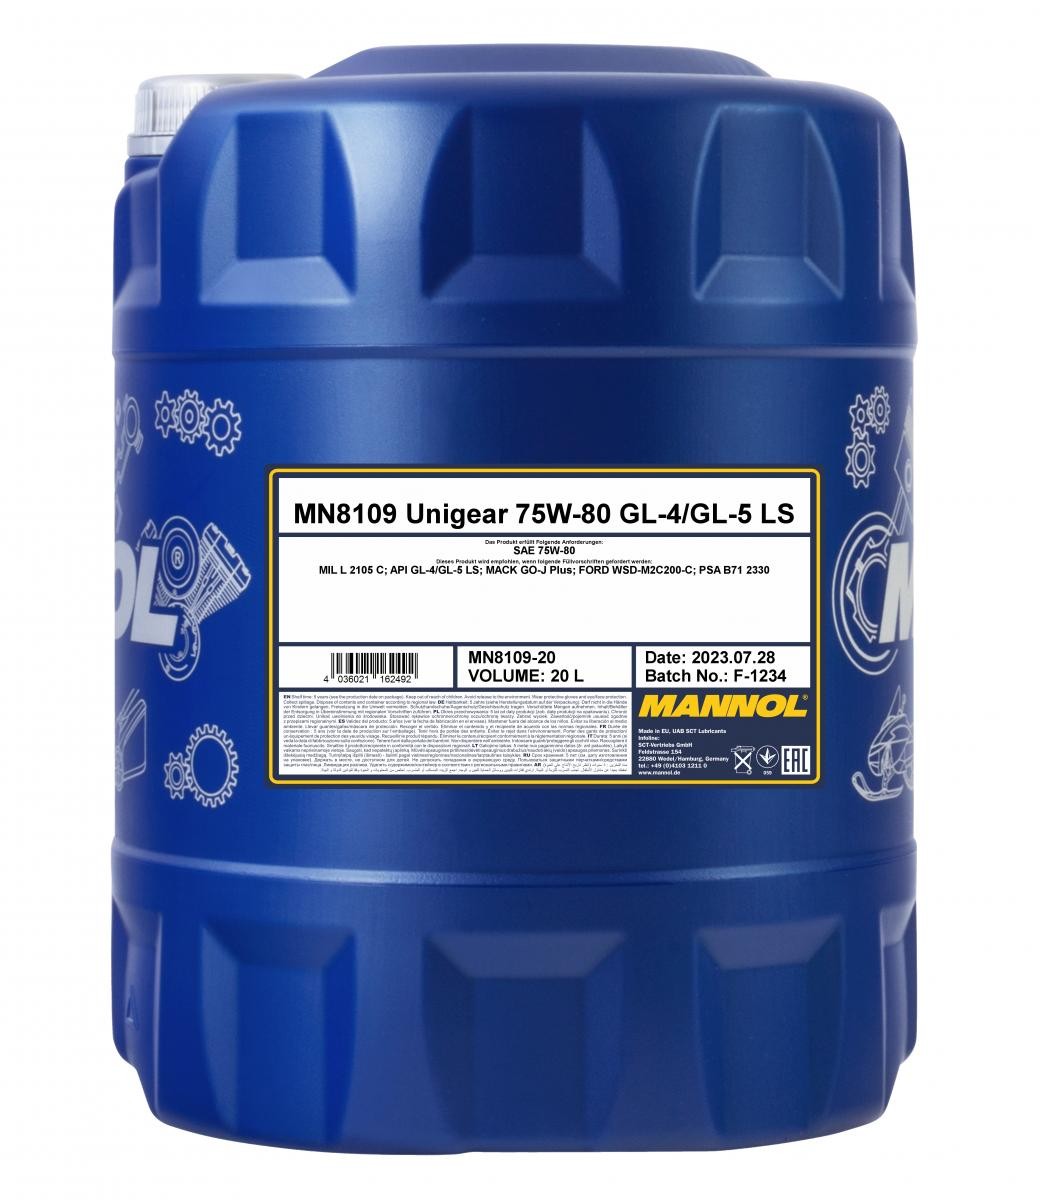 MANNOL Unigear MN8109-20 Transmission fluid 75W-80, Synthetic Oil, Capacity: 20l